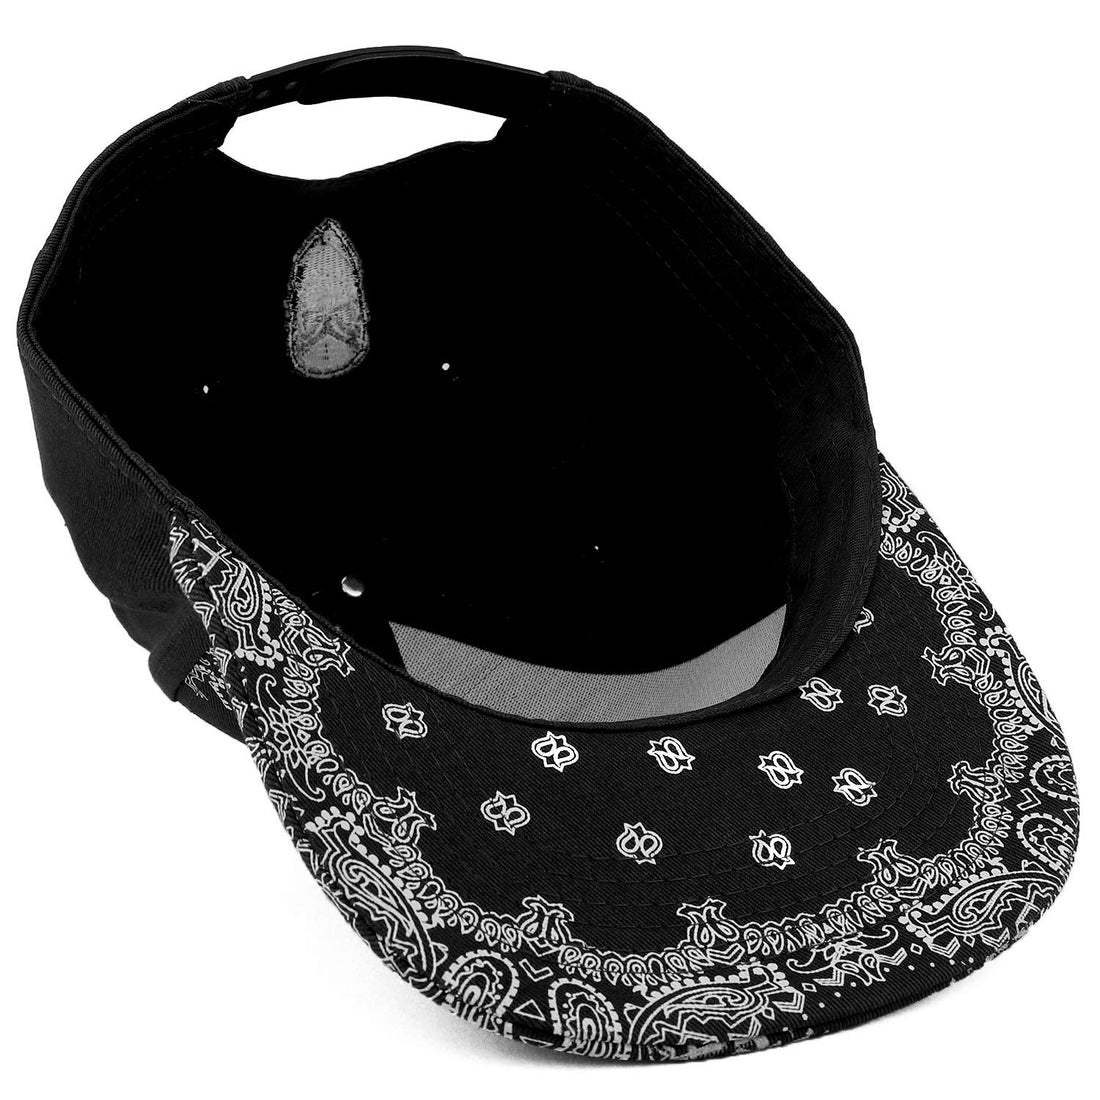 Trendy Apparel Shop Skull Bandana Embroidered Snapback with Paisley Print Flatbill Cap